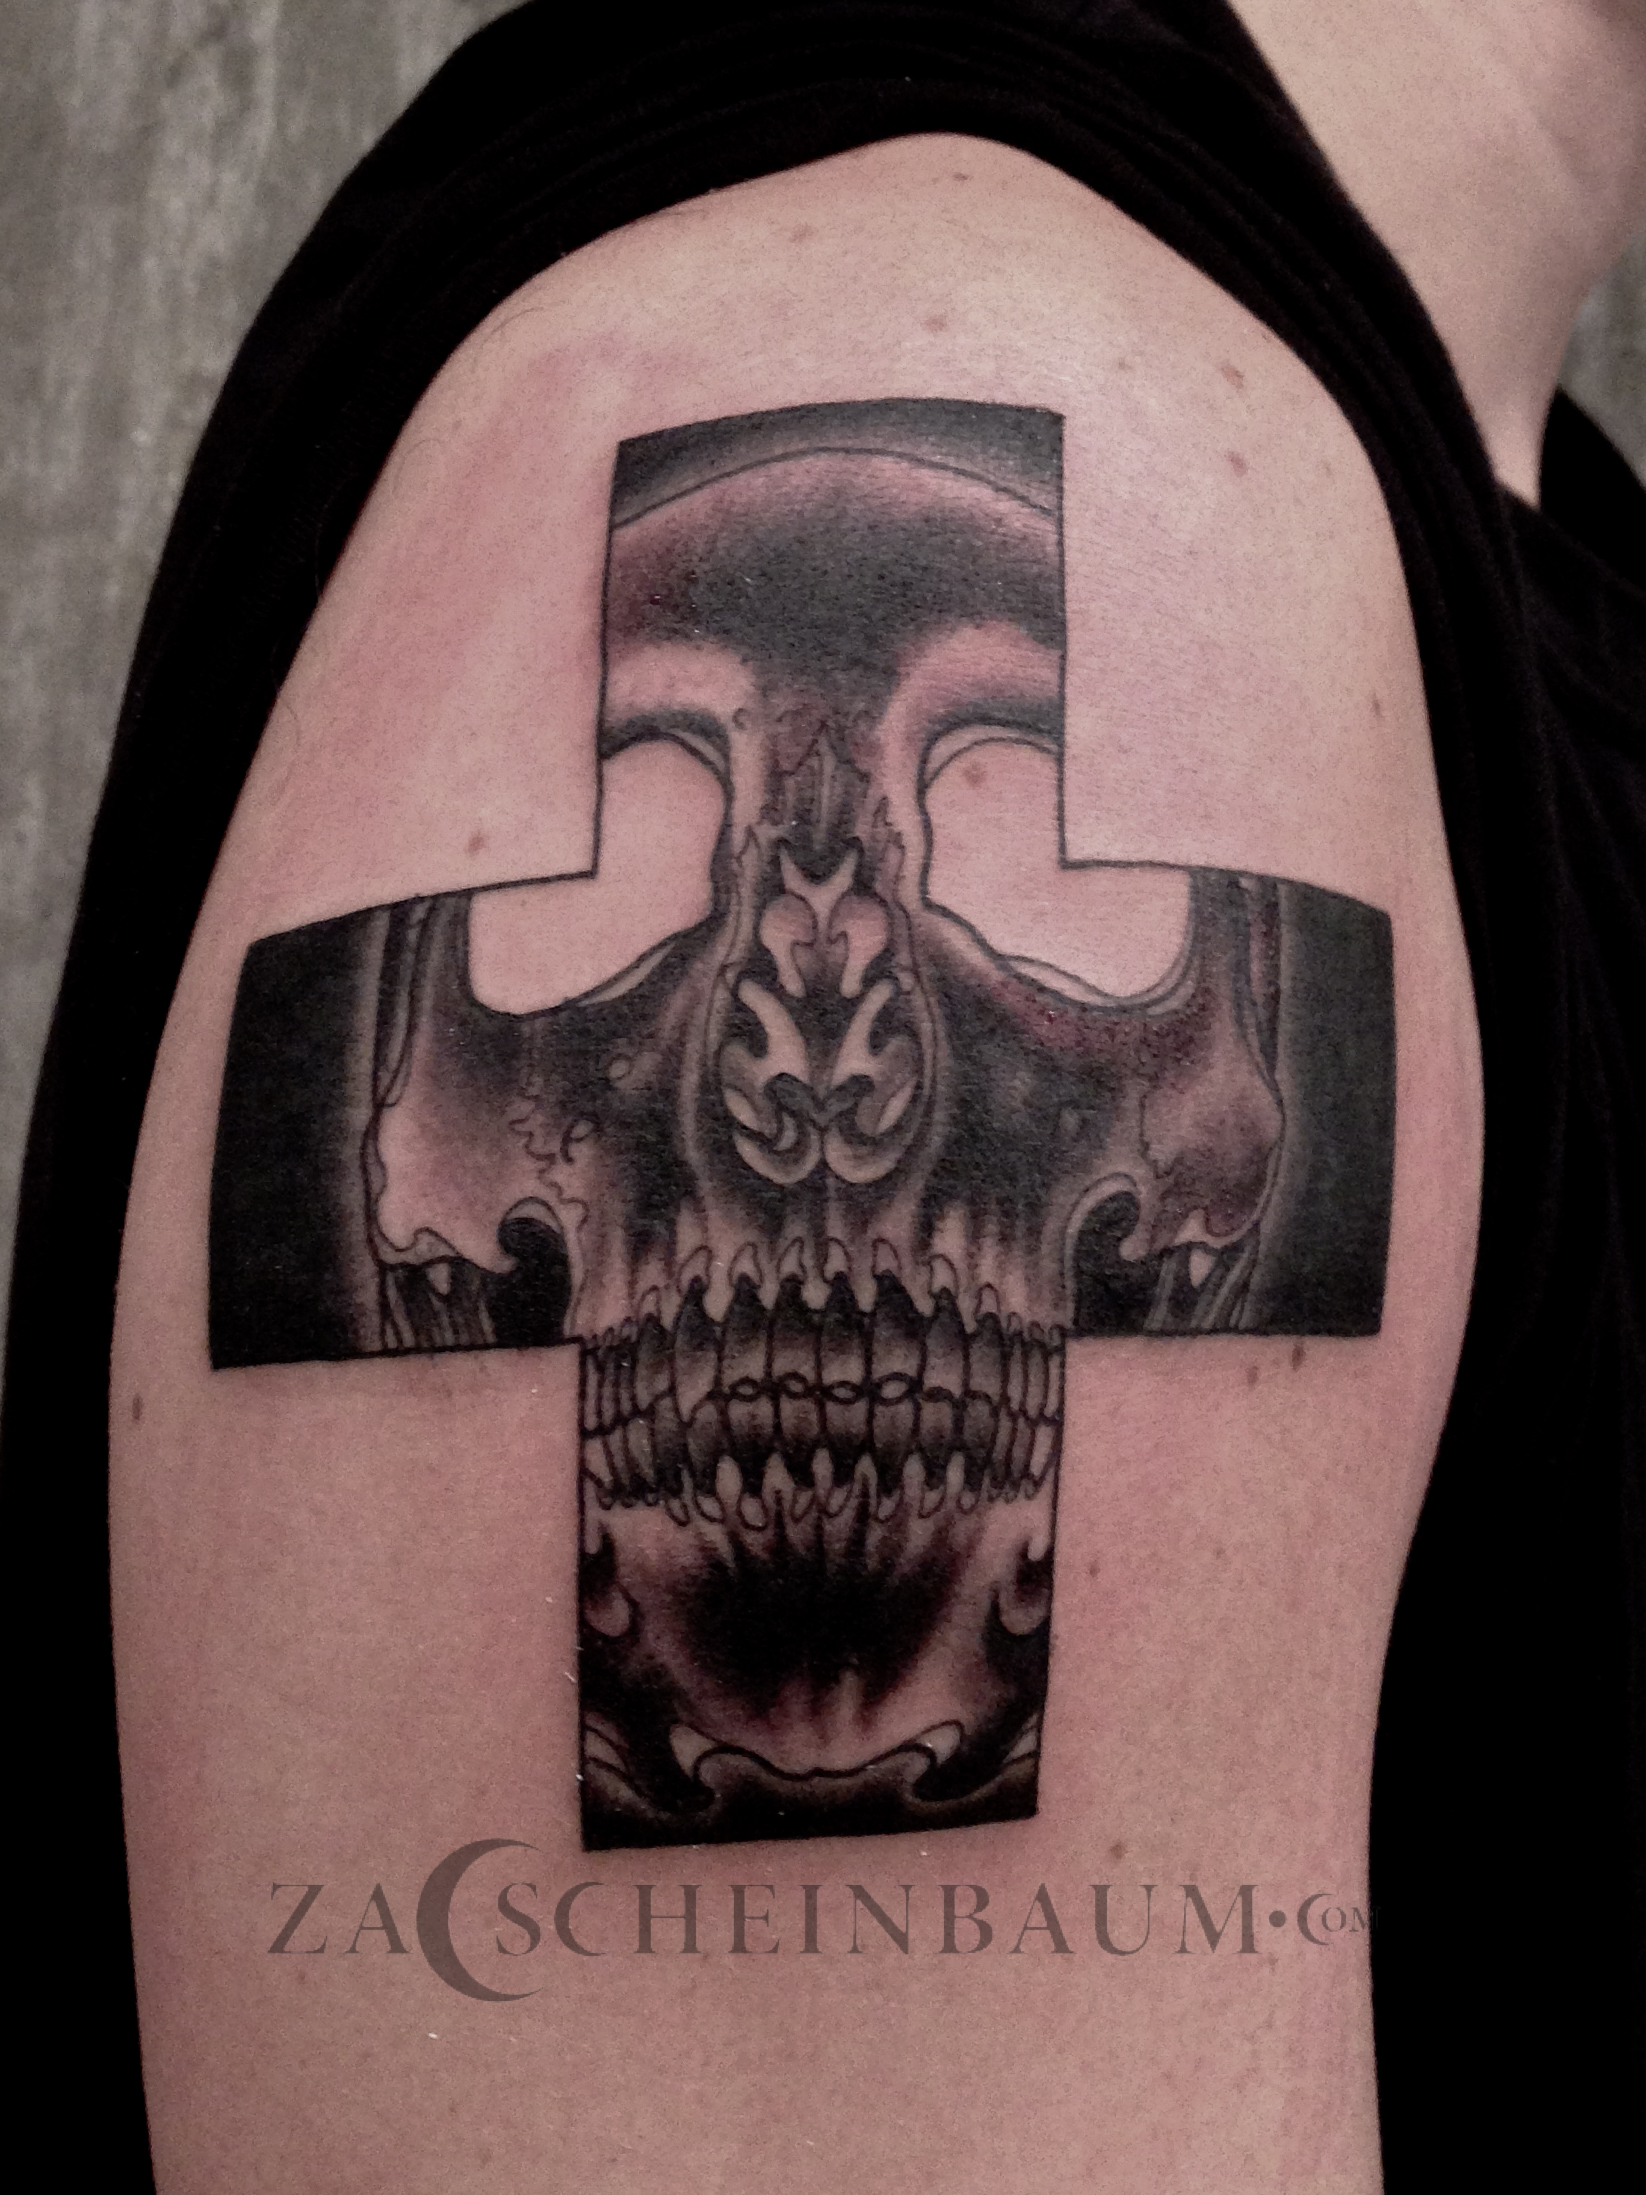 Zac-Scheinbaum-Saved-Tattoo-negative-skull-2013-2013-1.jpg